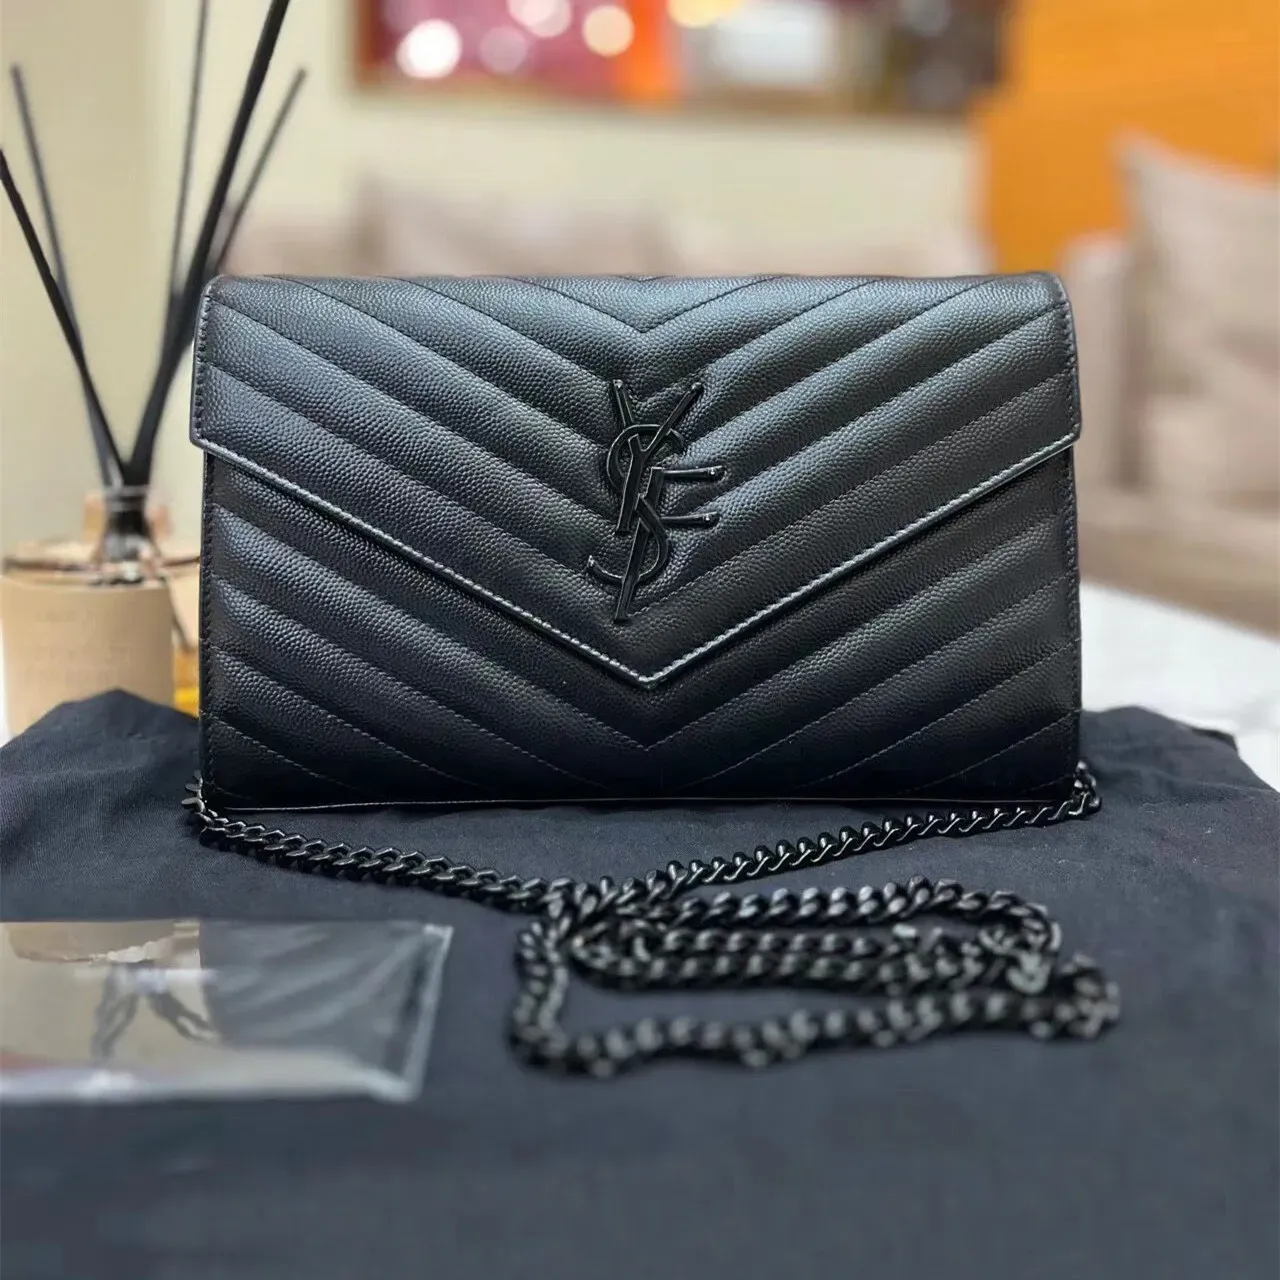 Luxury Designer Woman Bag Handbag Women Shoulder Bags Genuine Leather Messenger Purse Chain with card holder slot clutch